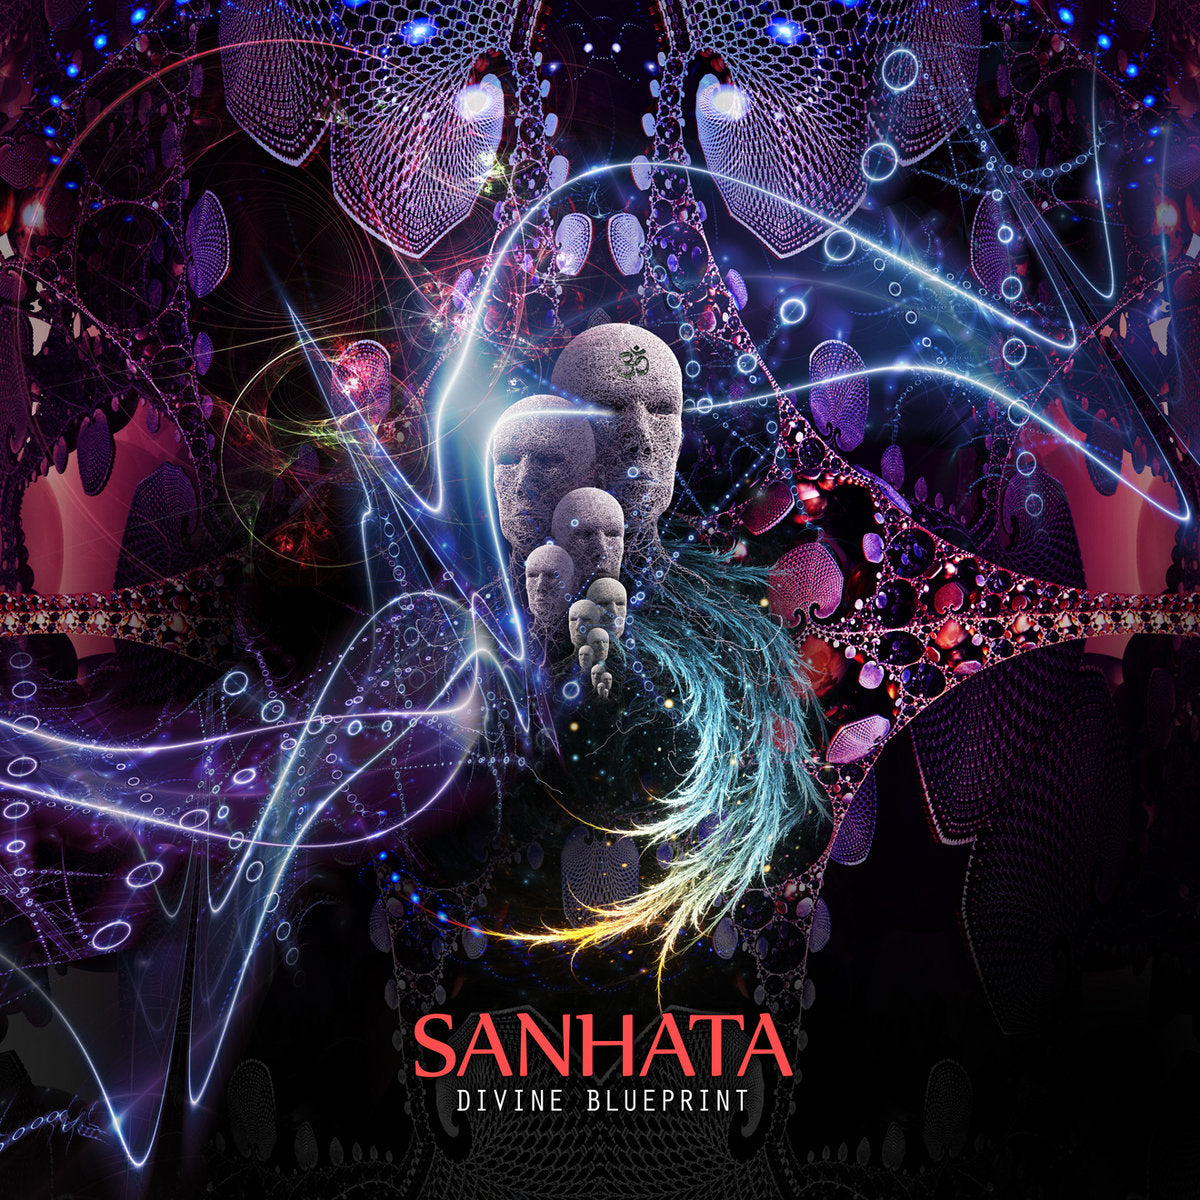 Divine Blueprint - Sanhata